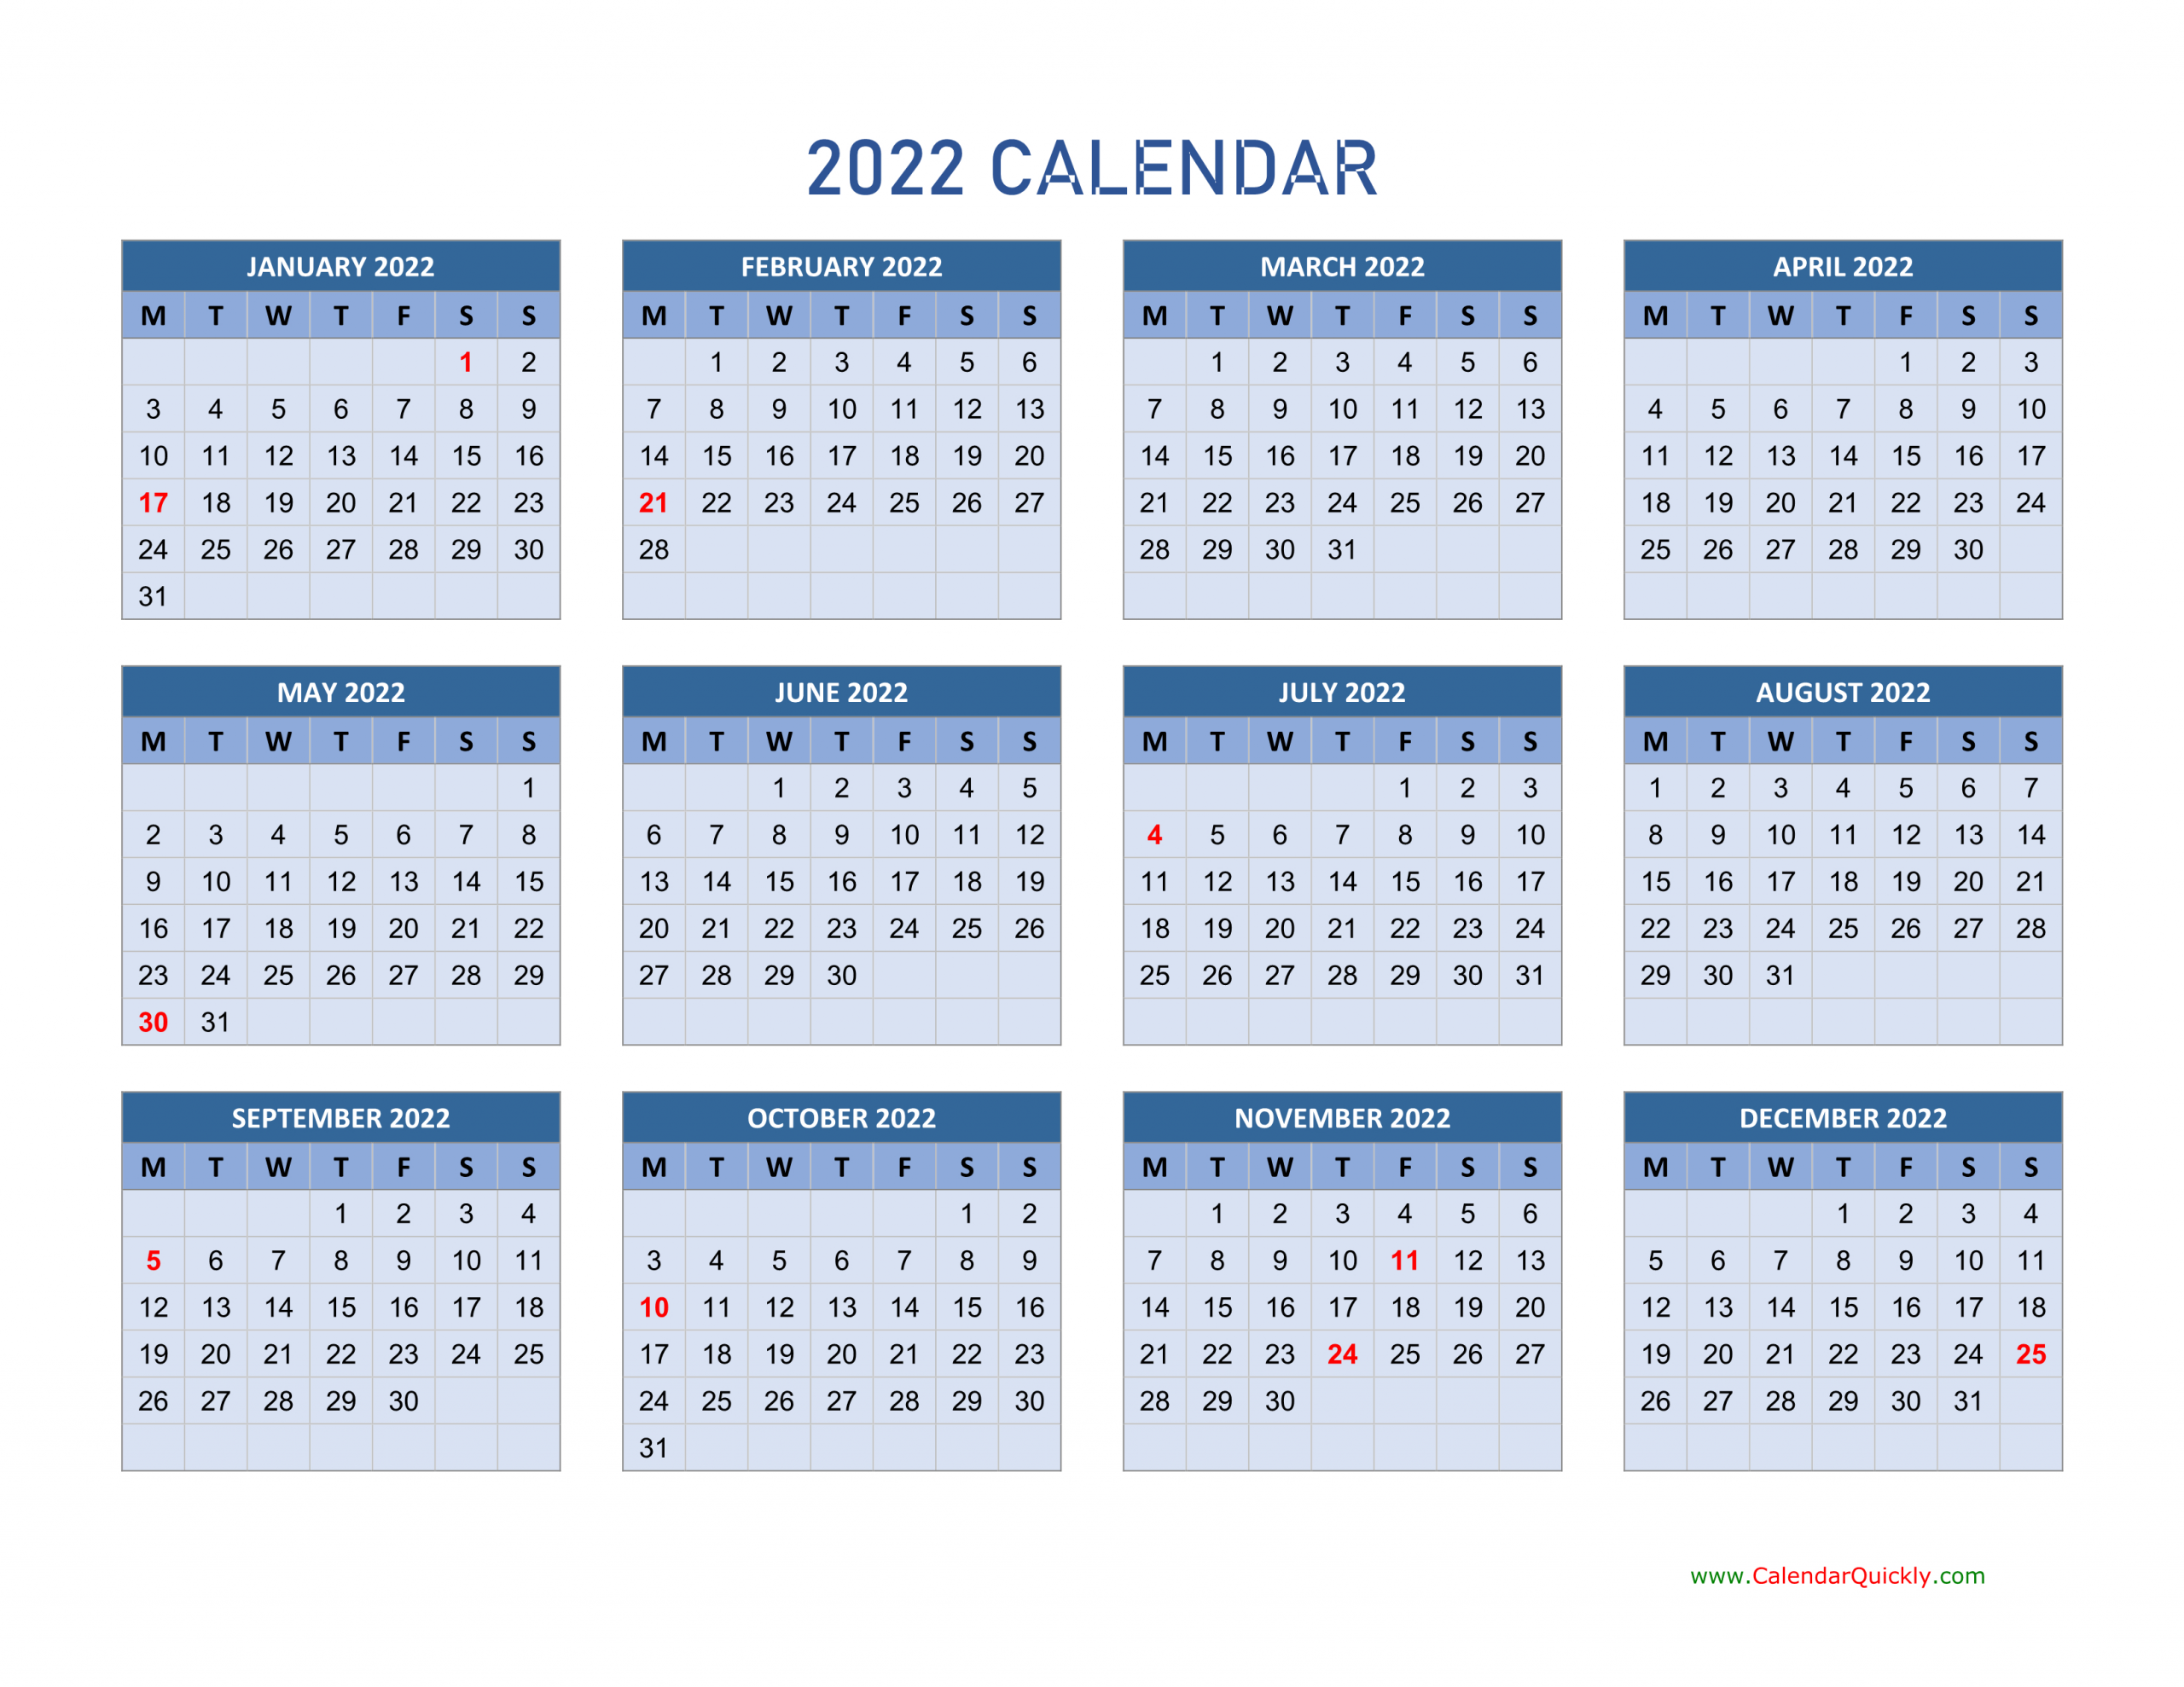 Monday 2022 Calendar Horizontal | Calendar Quickly